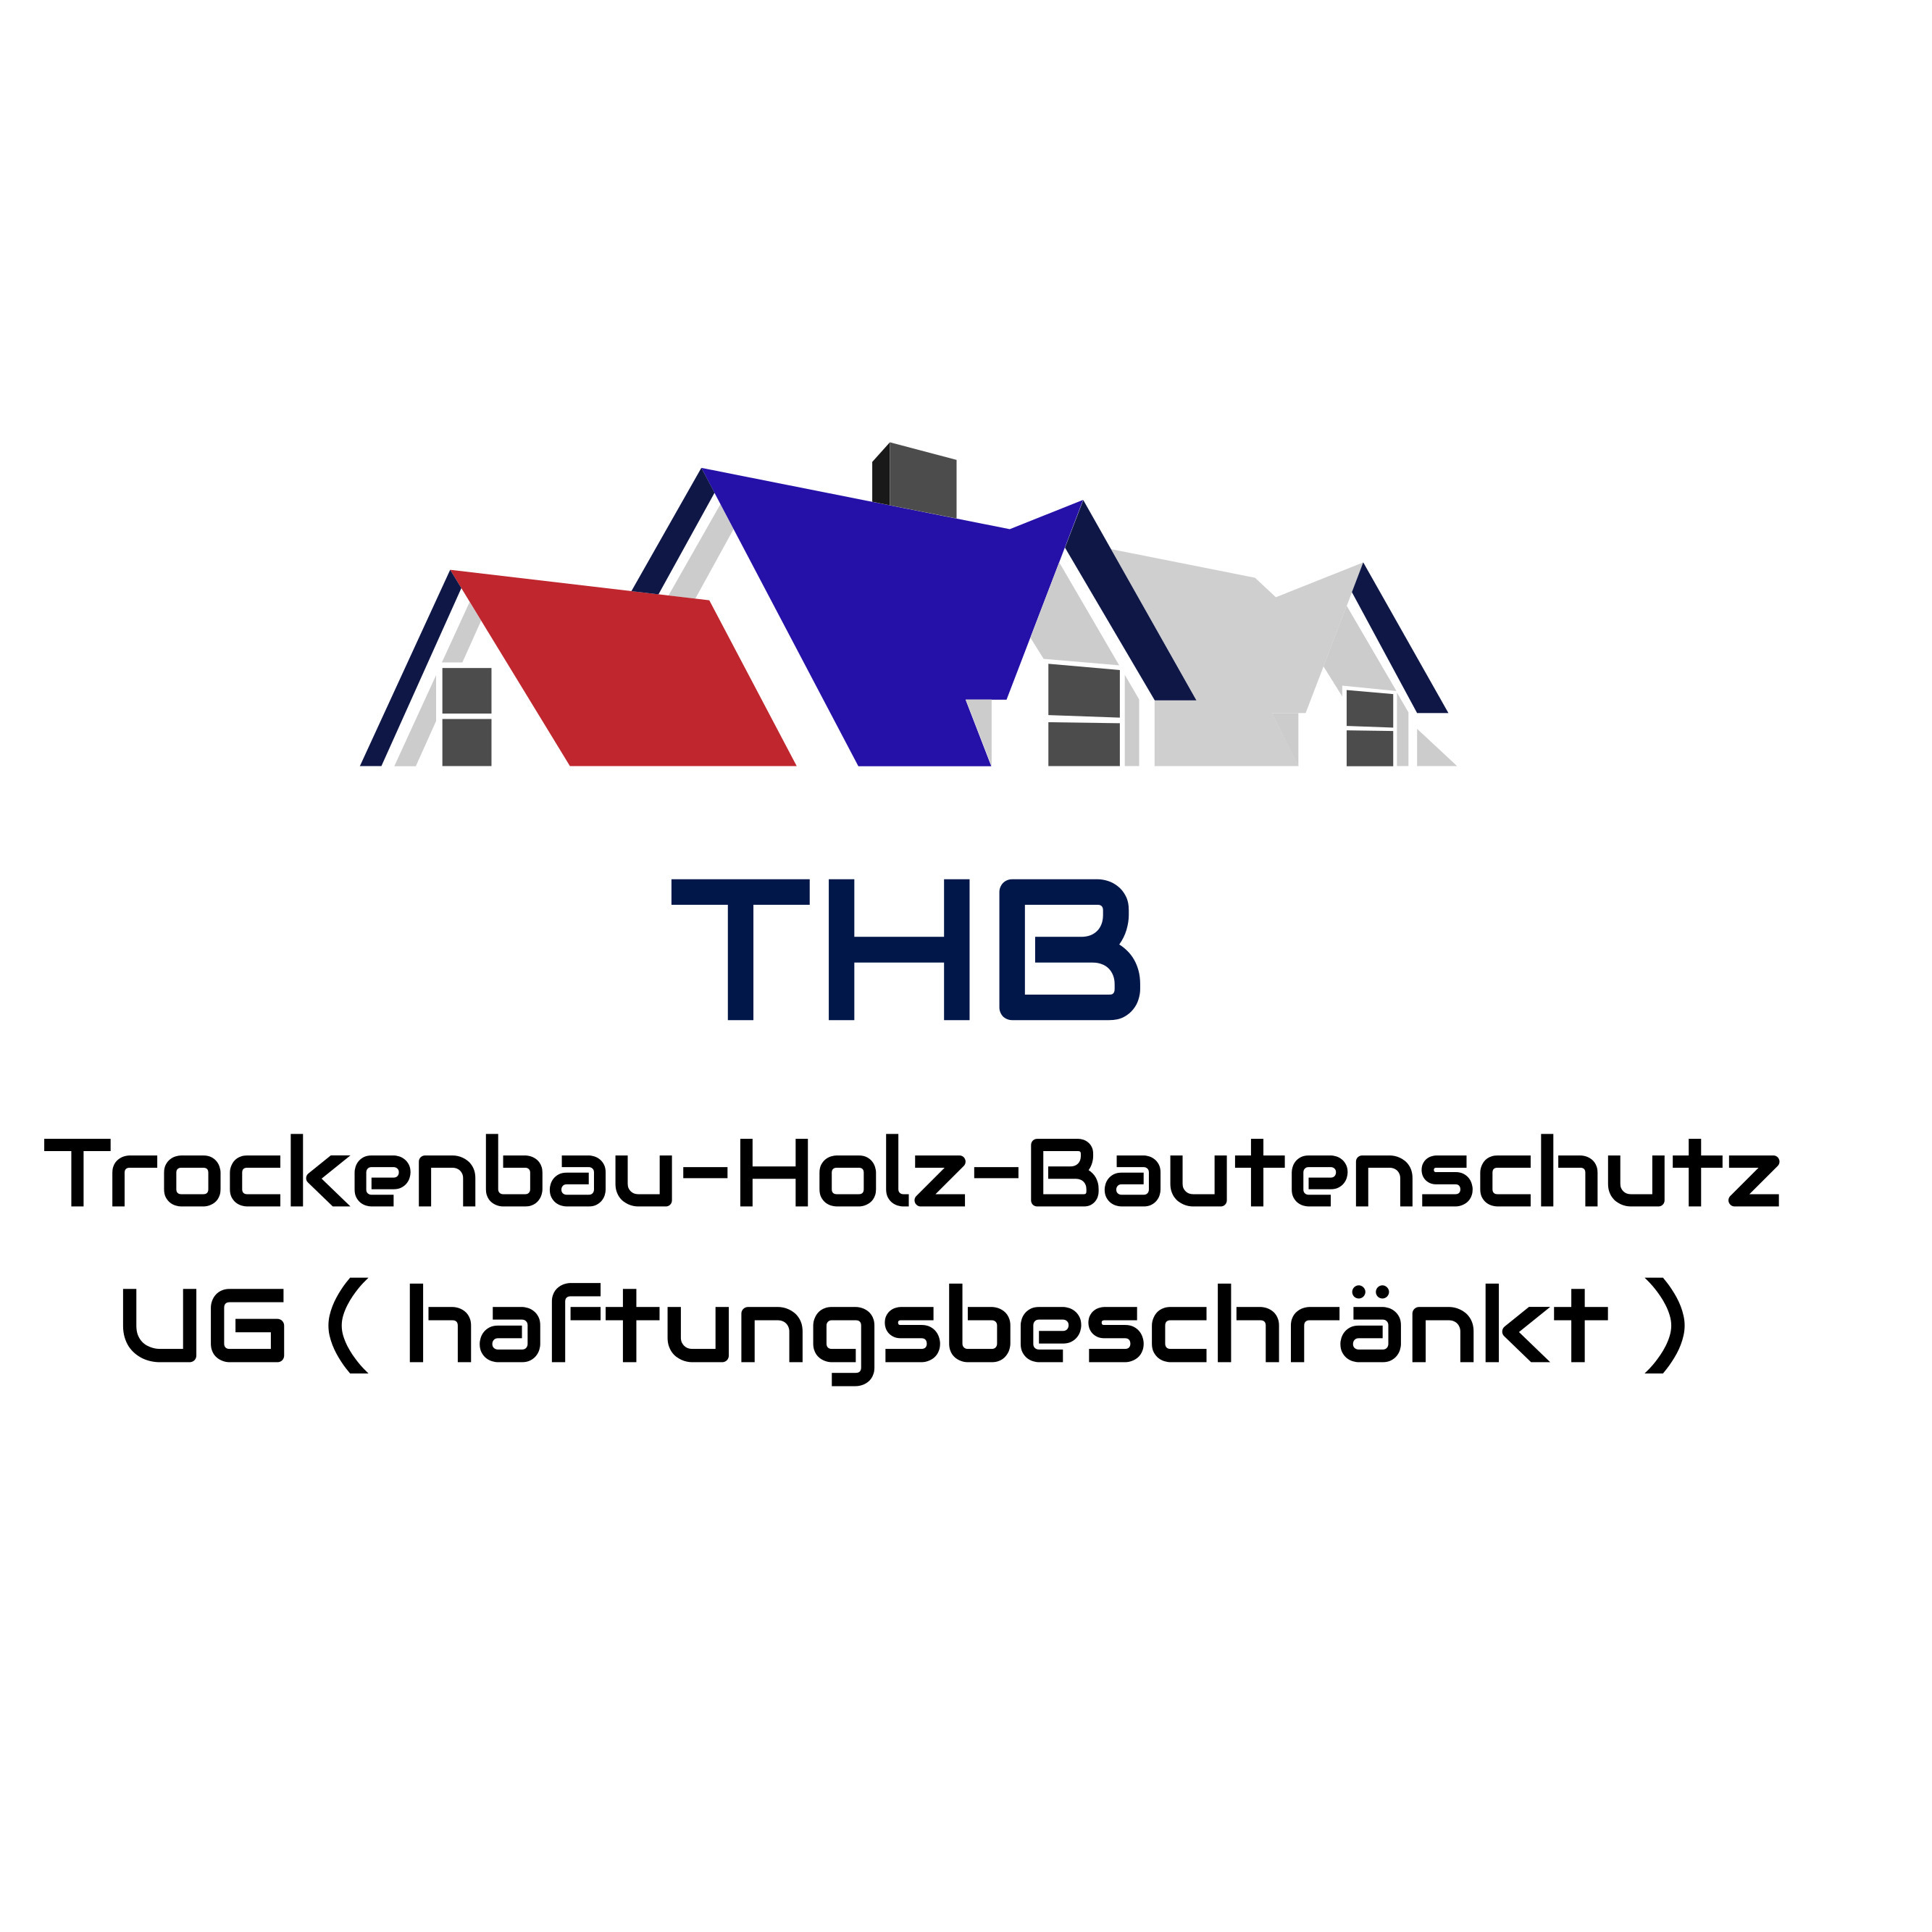 THB Trockenbau - Holz - Bautenschutz UG in Wolfsburg - Logo